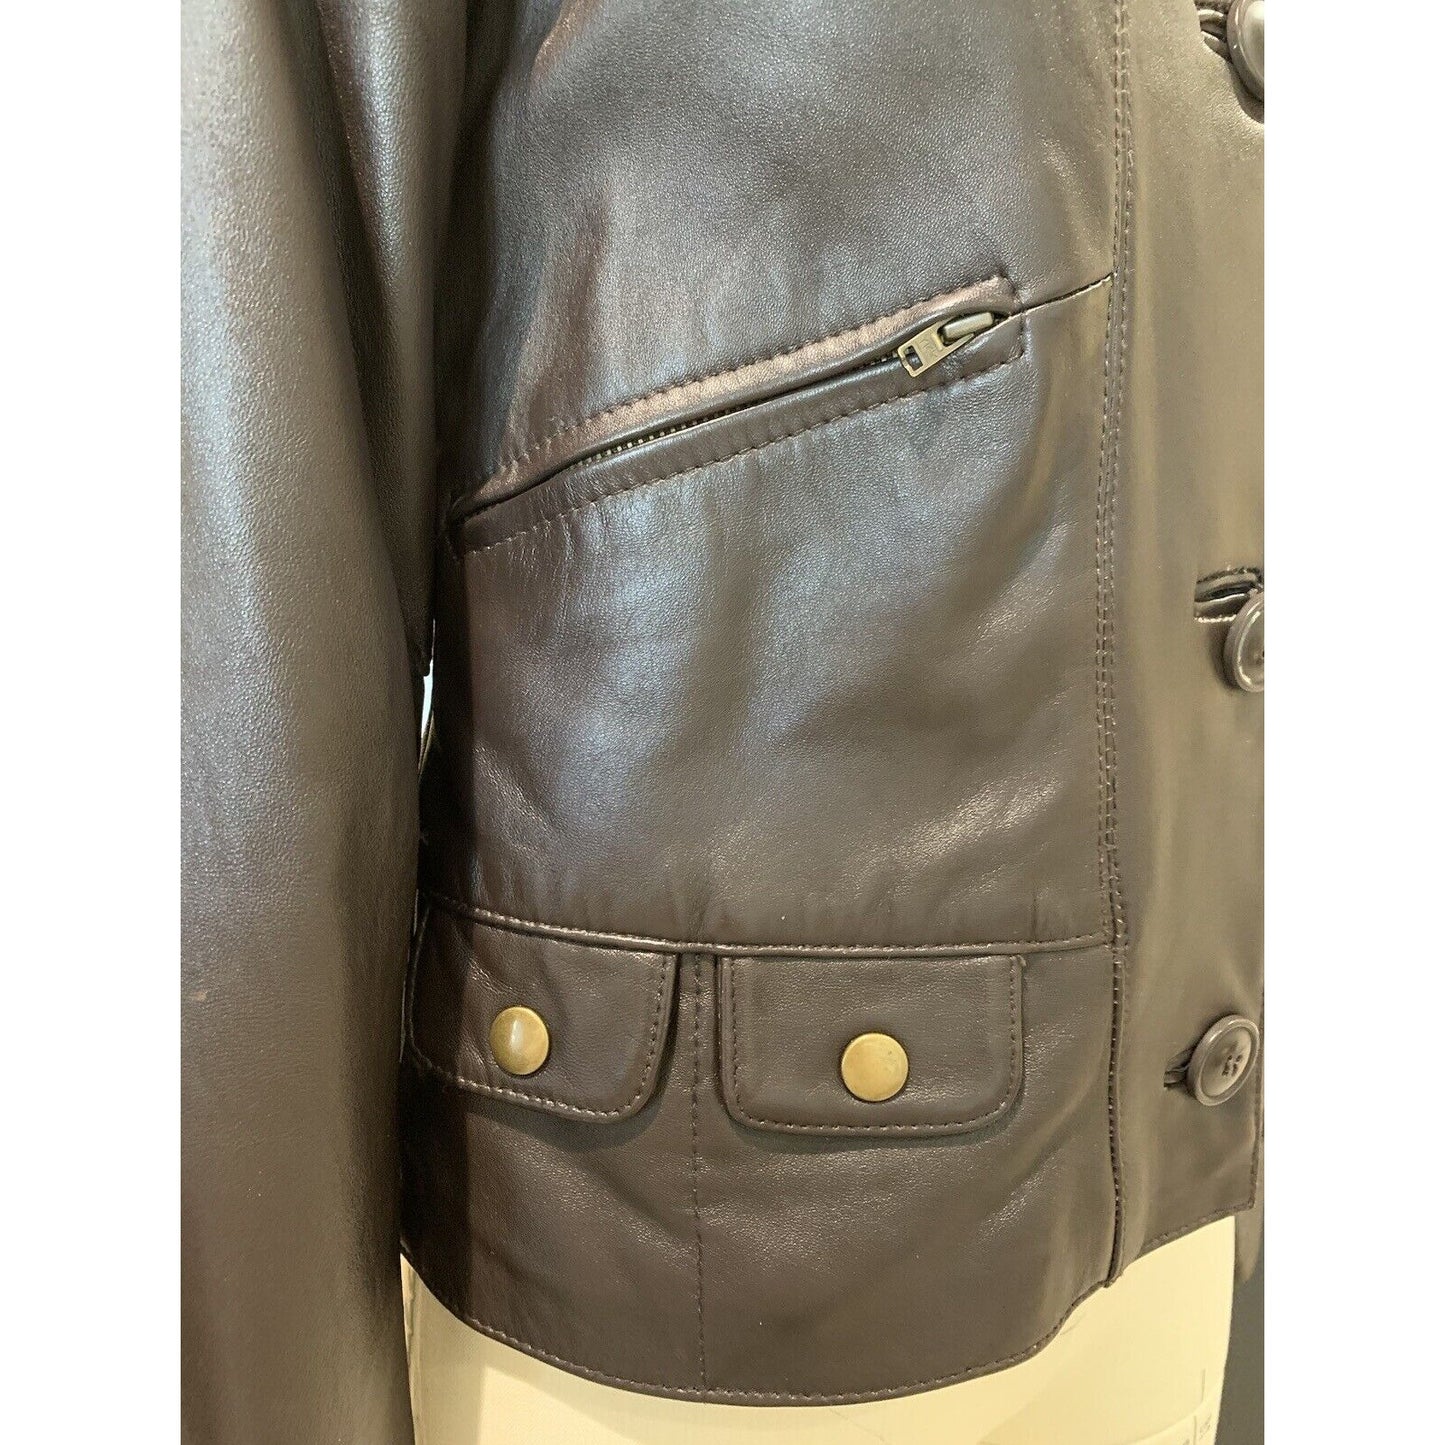 Closeup Of Jacket Zipper And Pocket Flaps